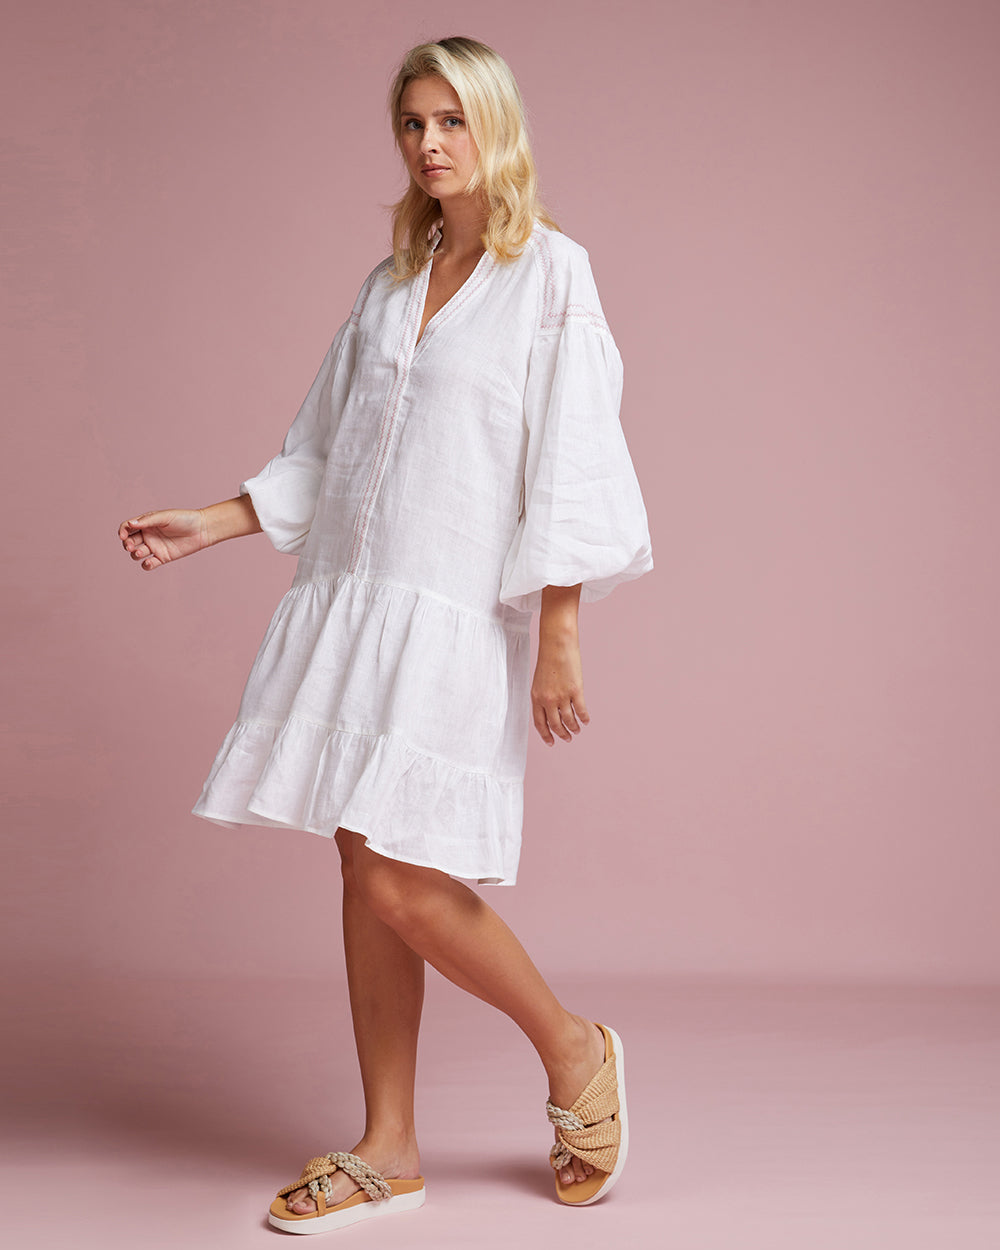 Sardinia Mini Dress - White Zig Zag